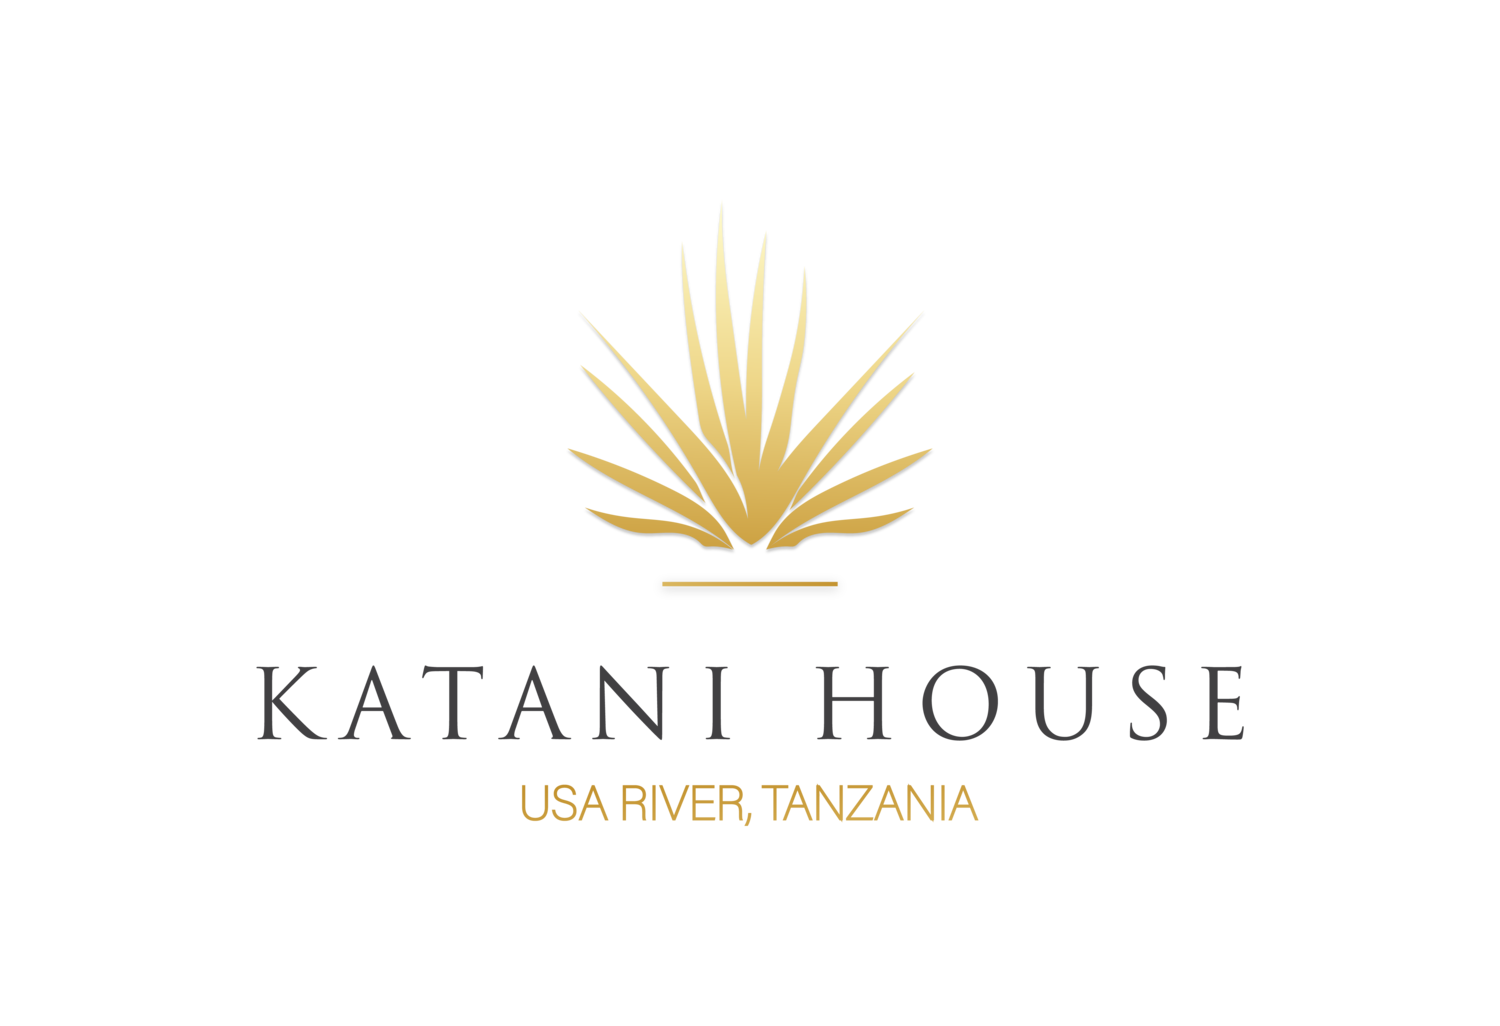 Katani House